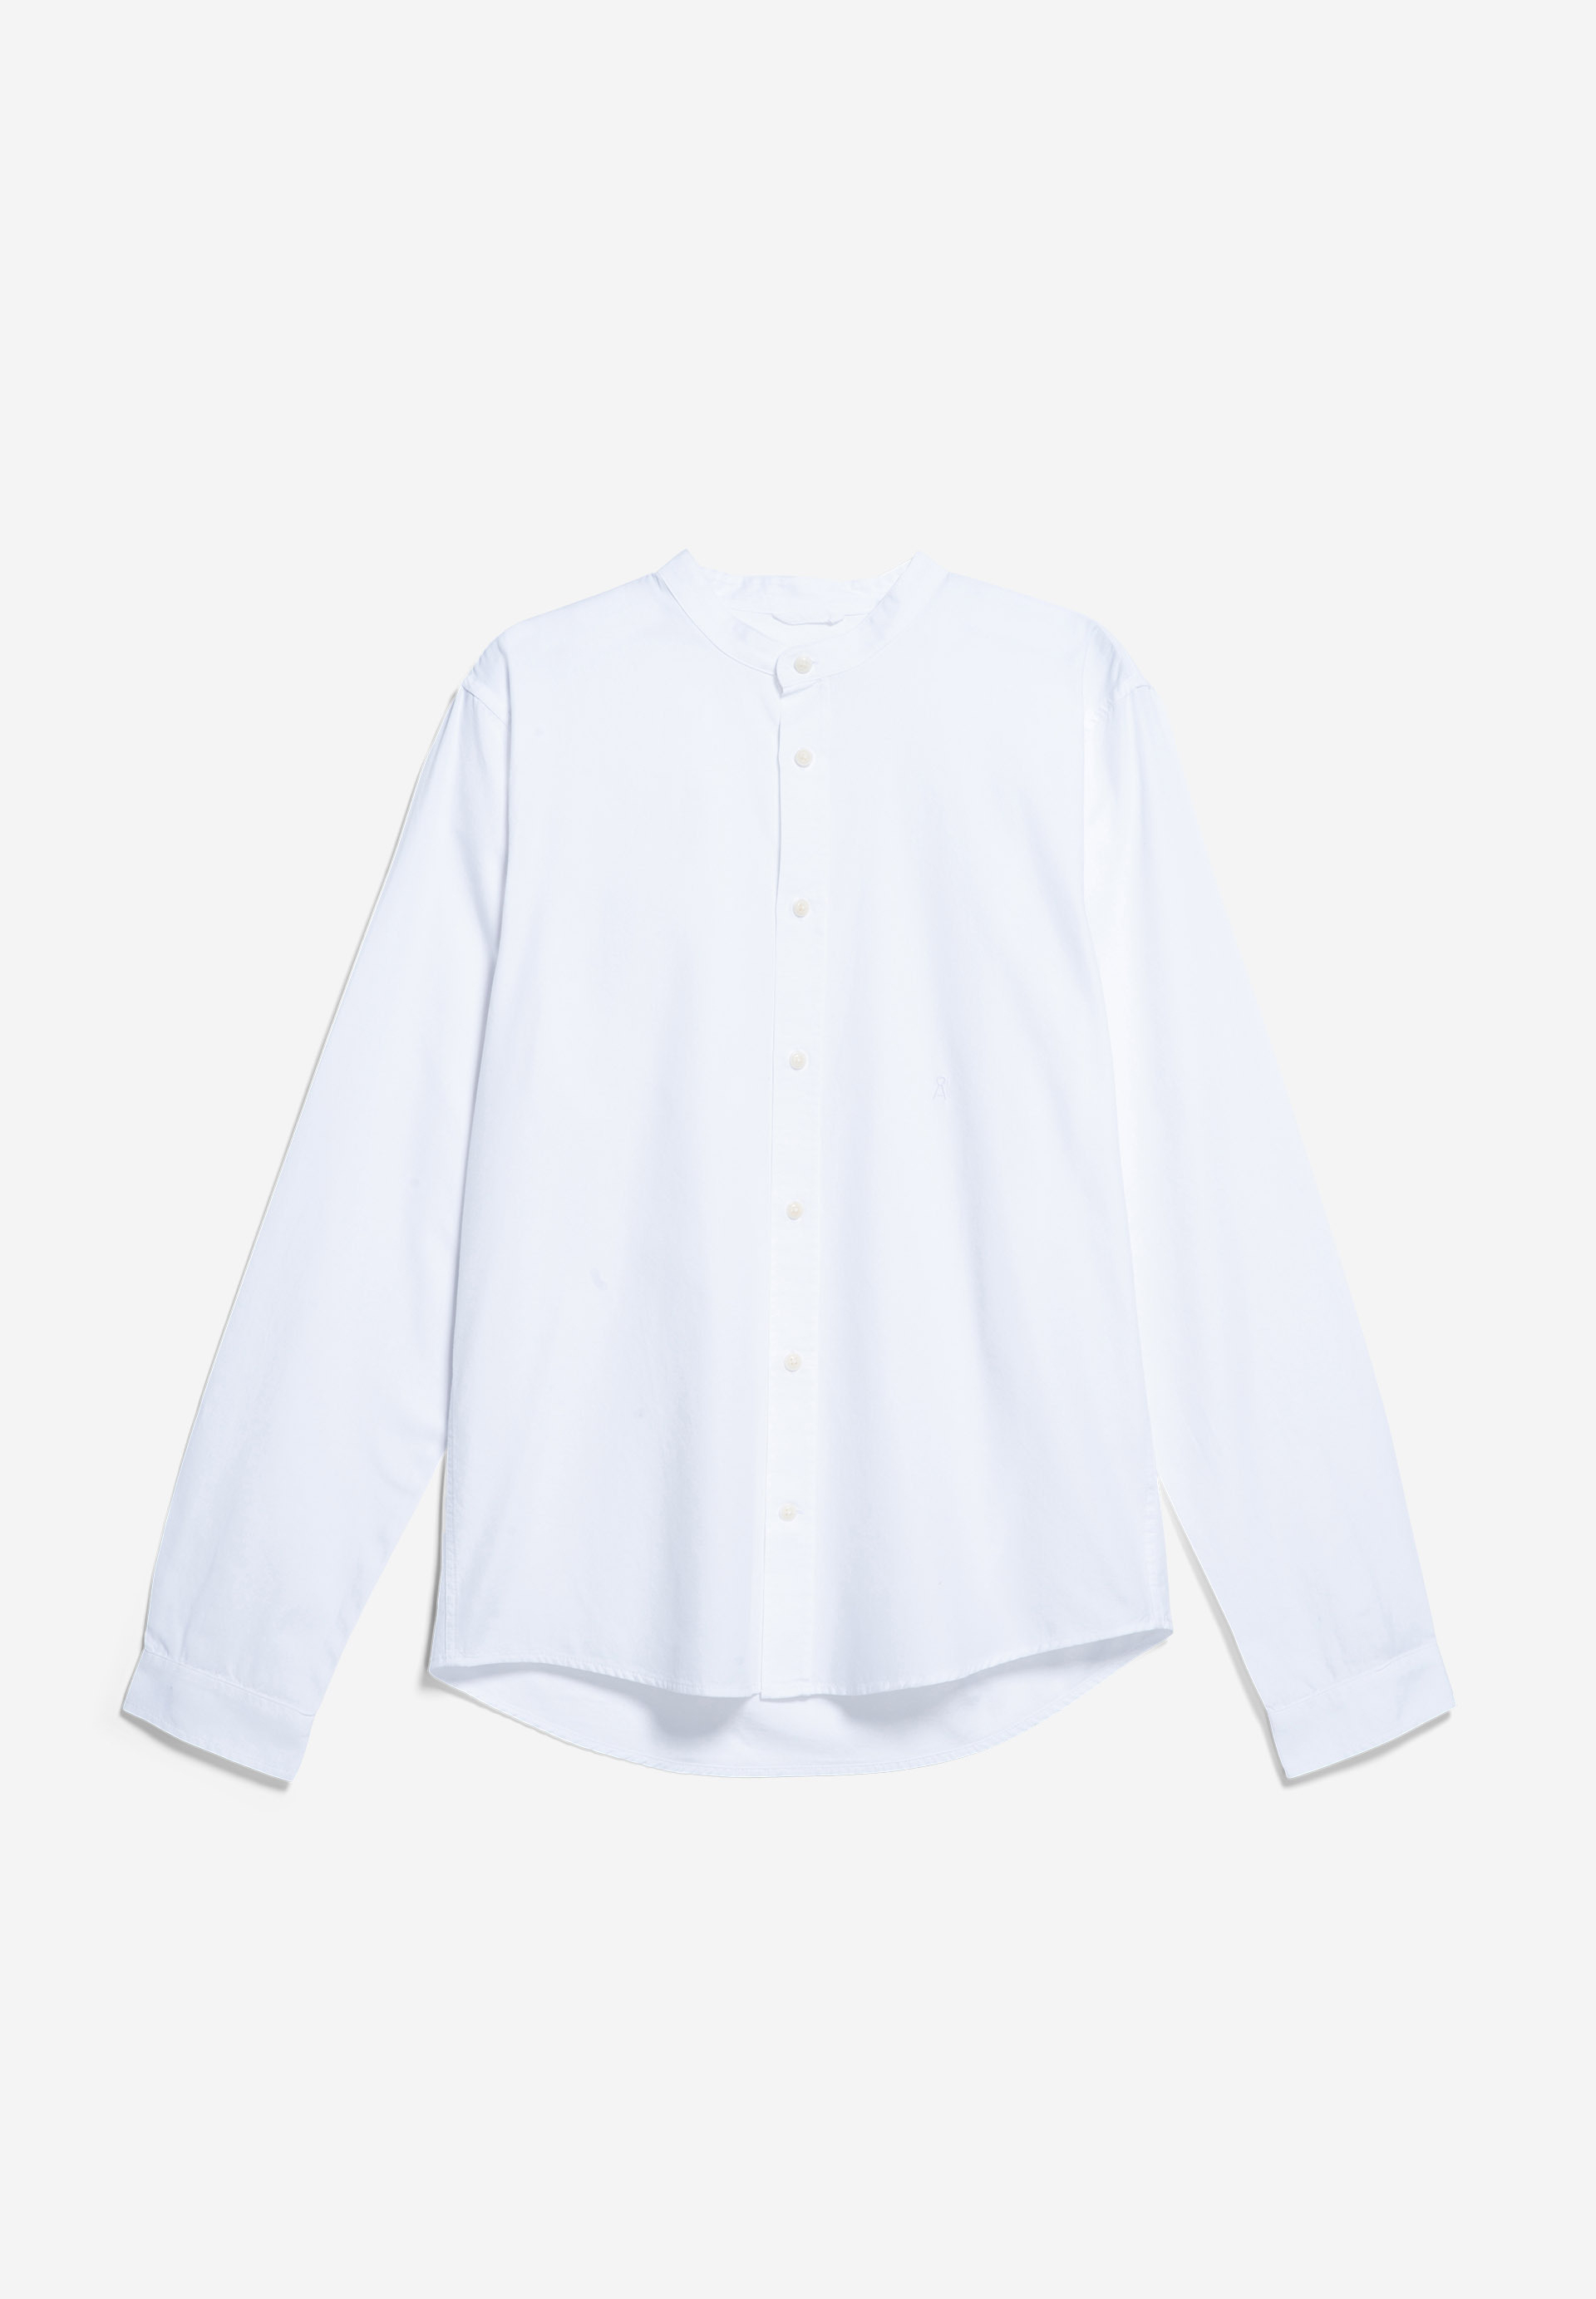 TOMAASAS Shirt Regular Fit made of Organic Cotton